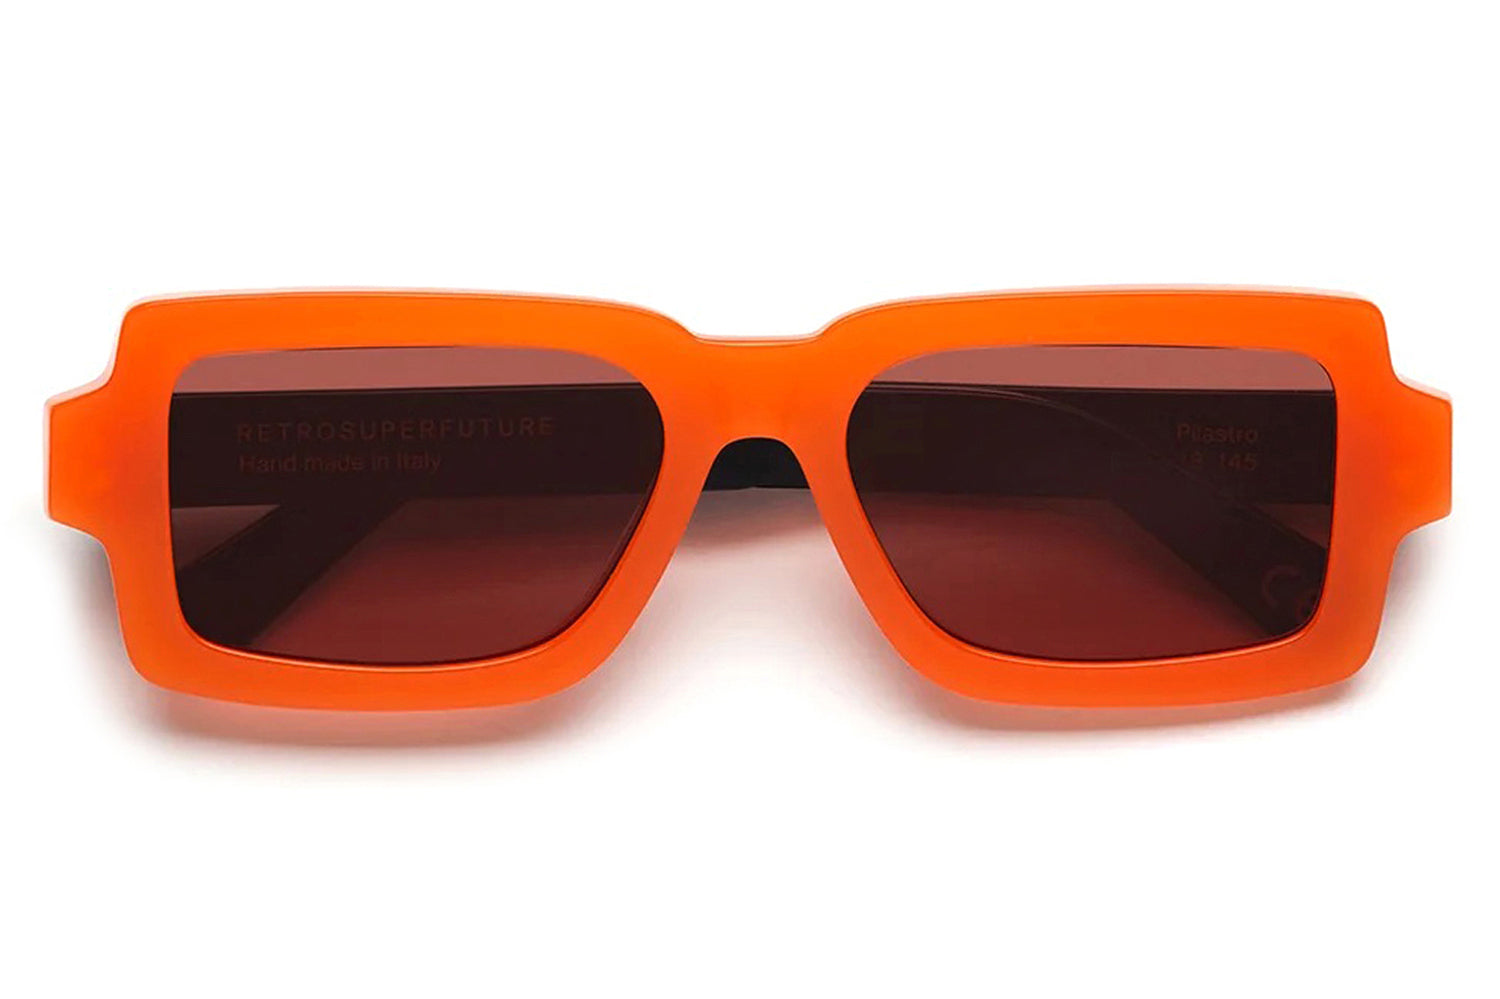 LOUIS VUITTON Millionaires Orange Trendy Sunglasses - dc eyewear